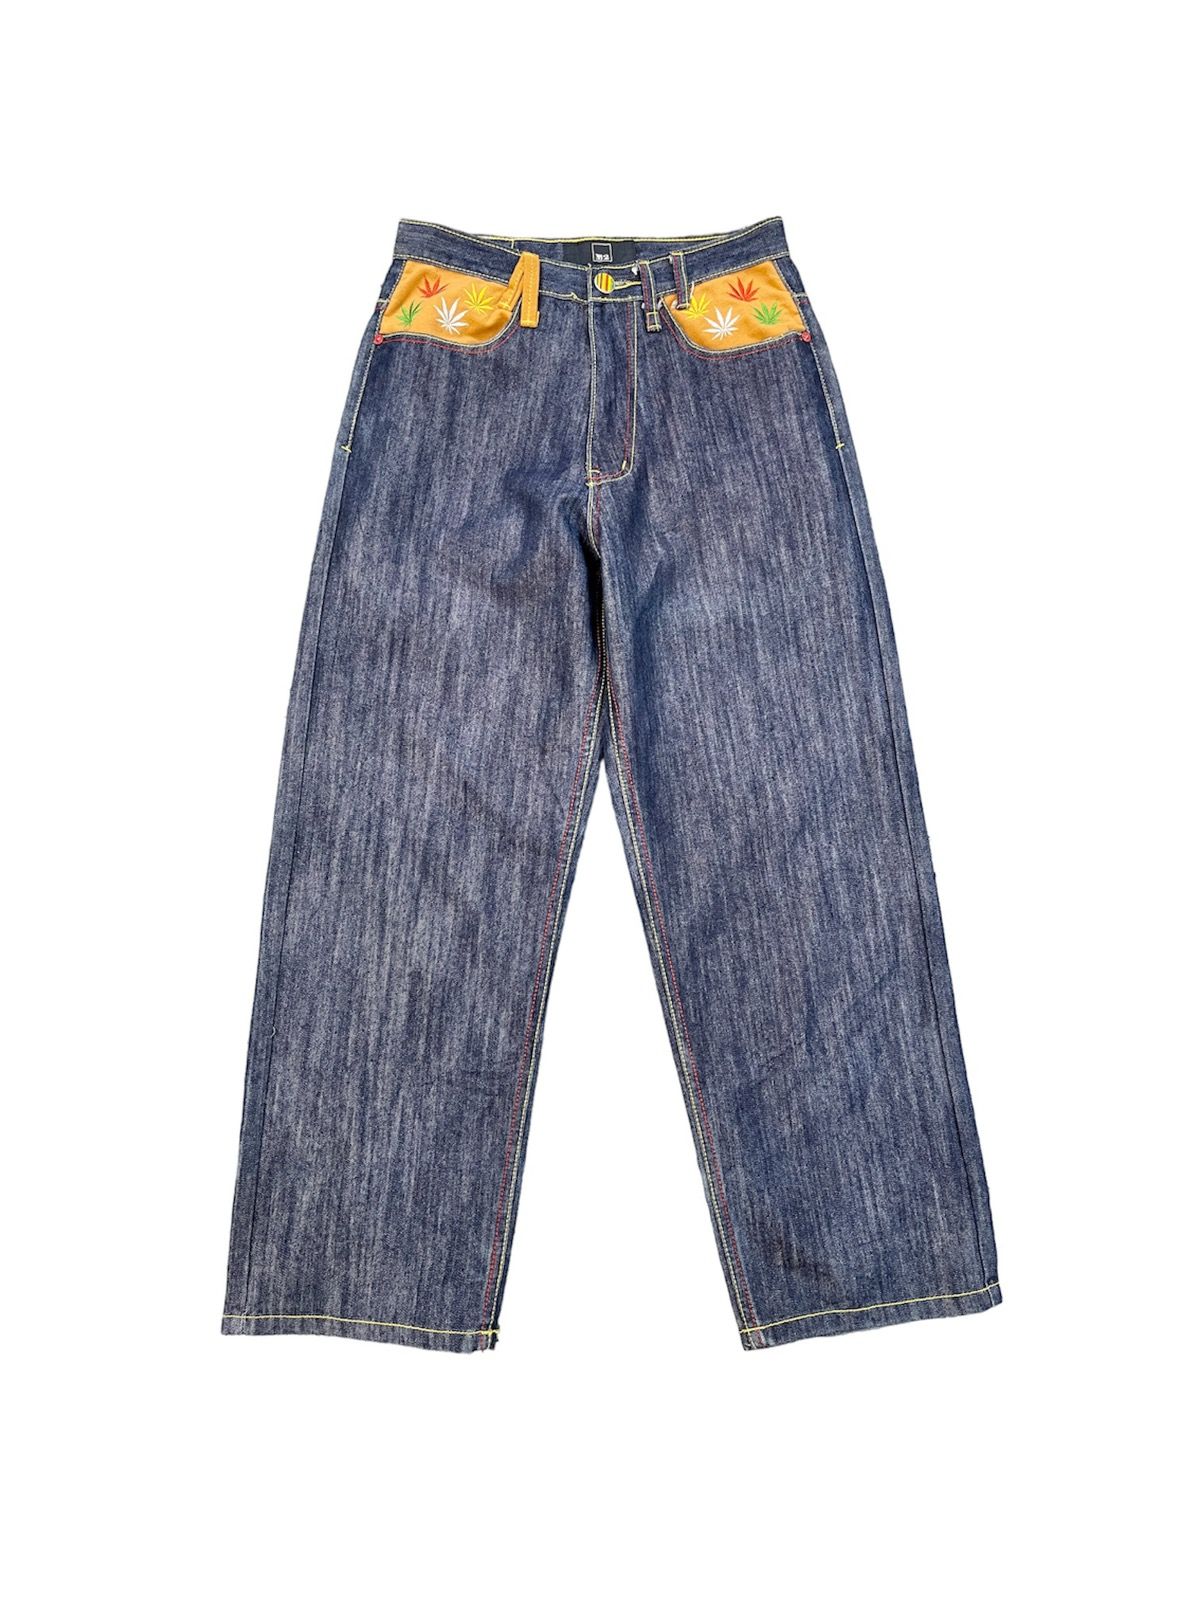 Pre-owned Distressed Denim X Vintage Baggy M2 Jeans Bob Marley Size 30x28 In Blue Denim Bob Marley